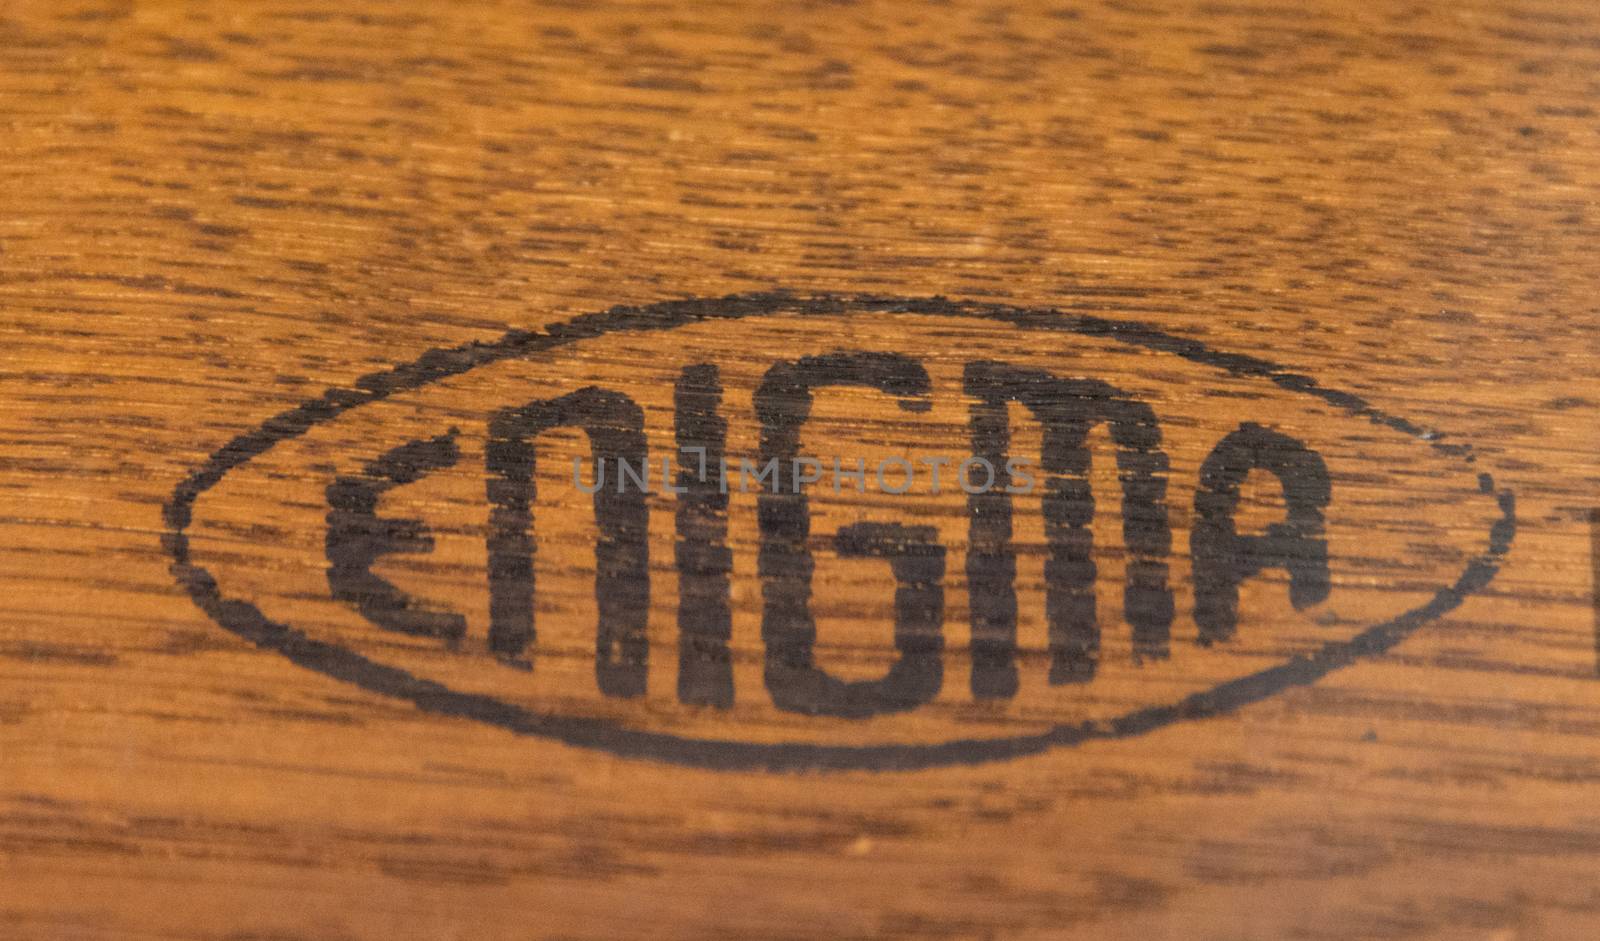 Enigma Machine logo